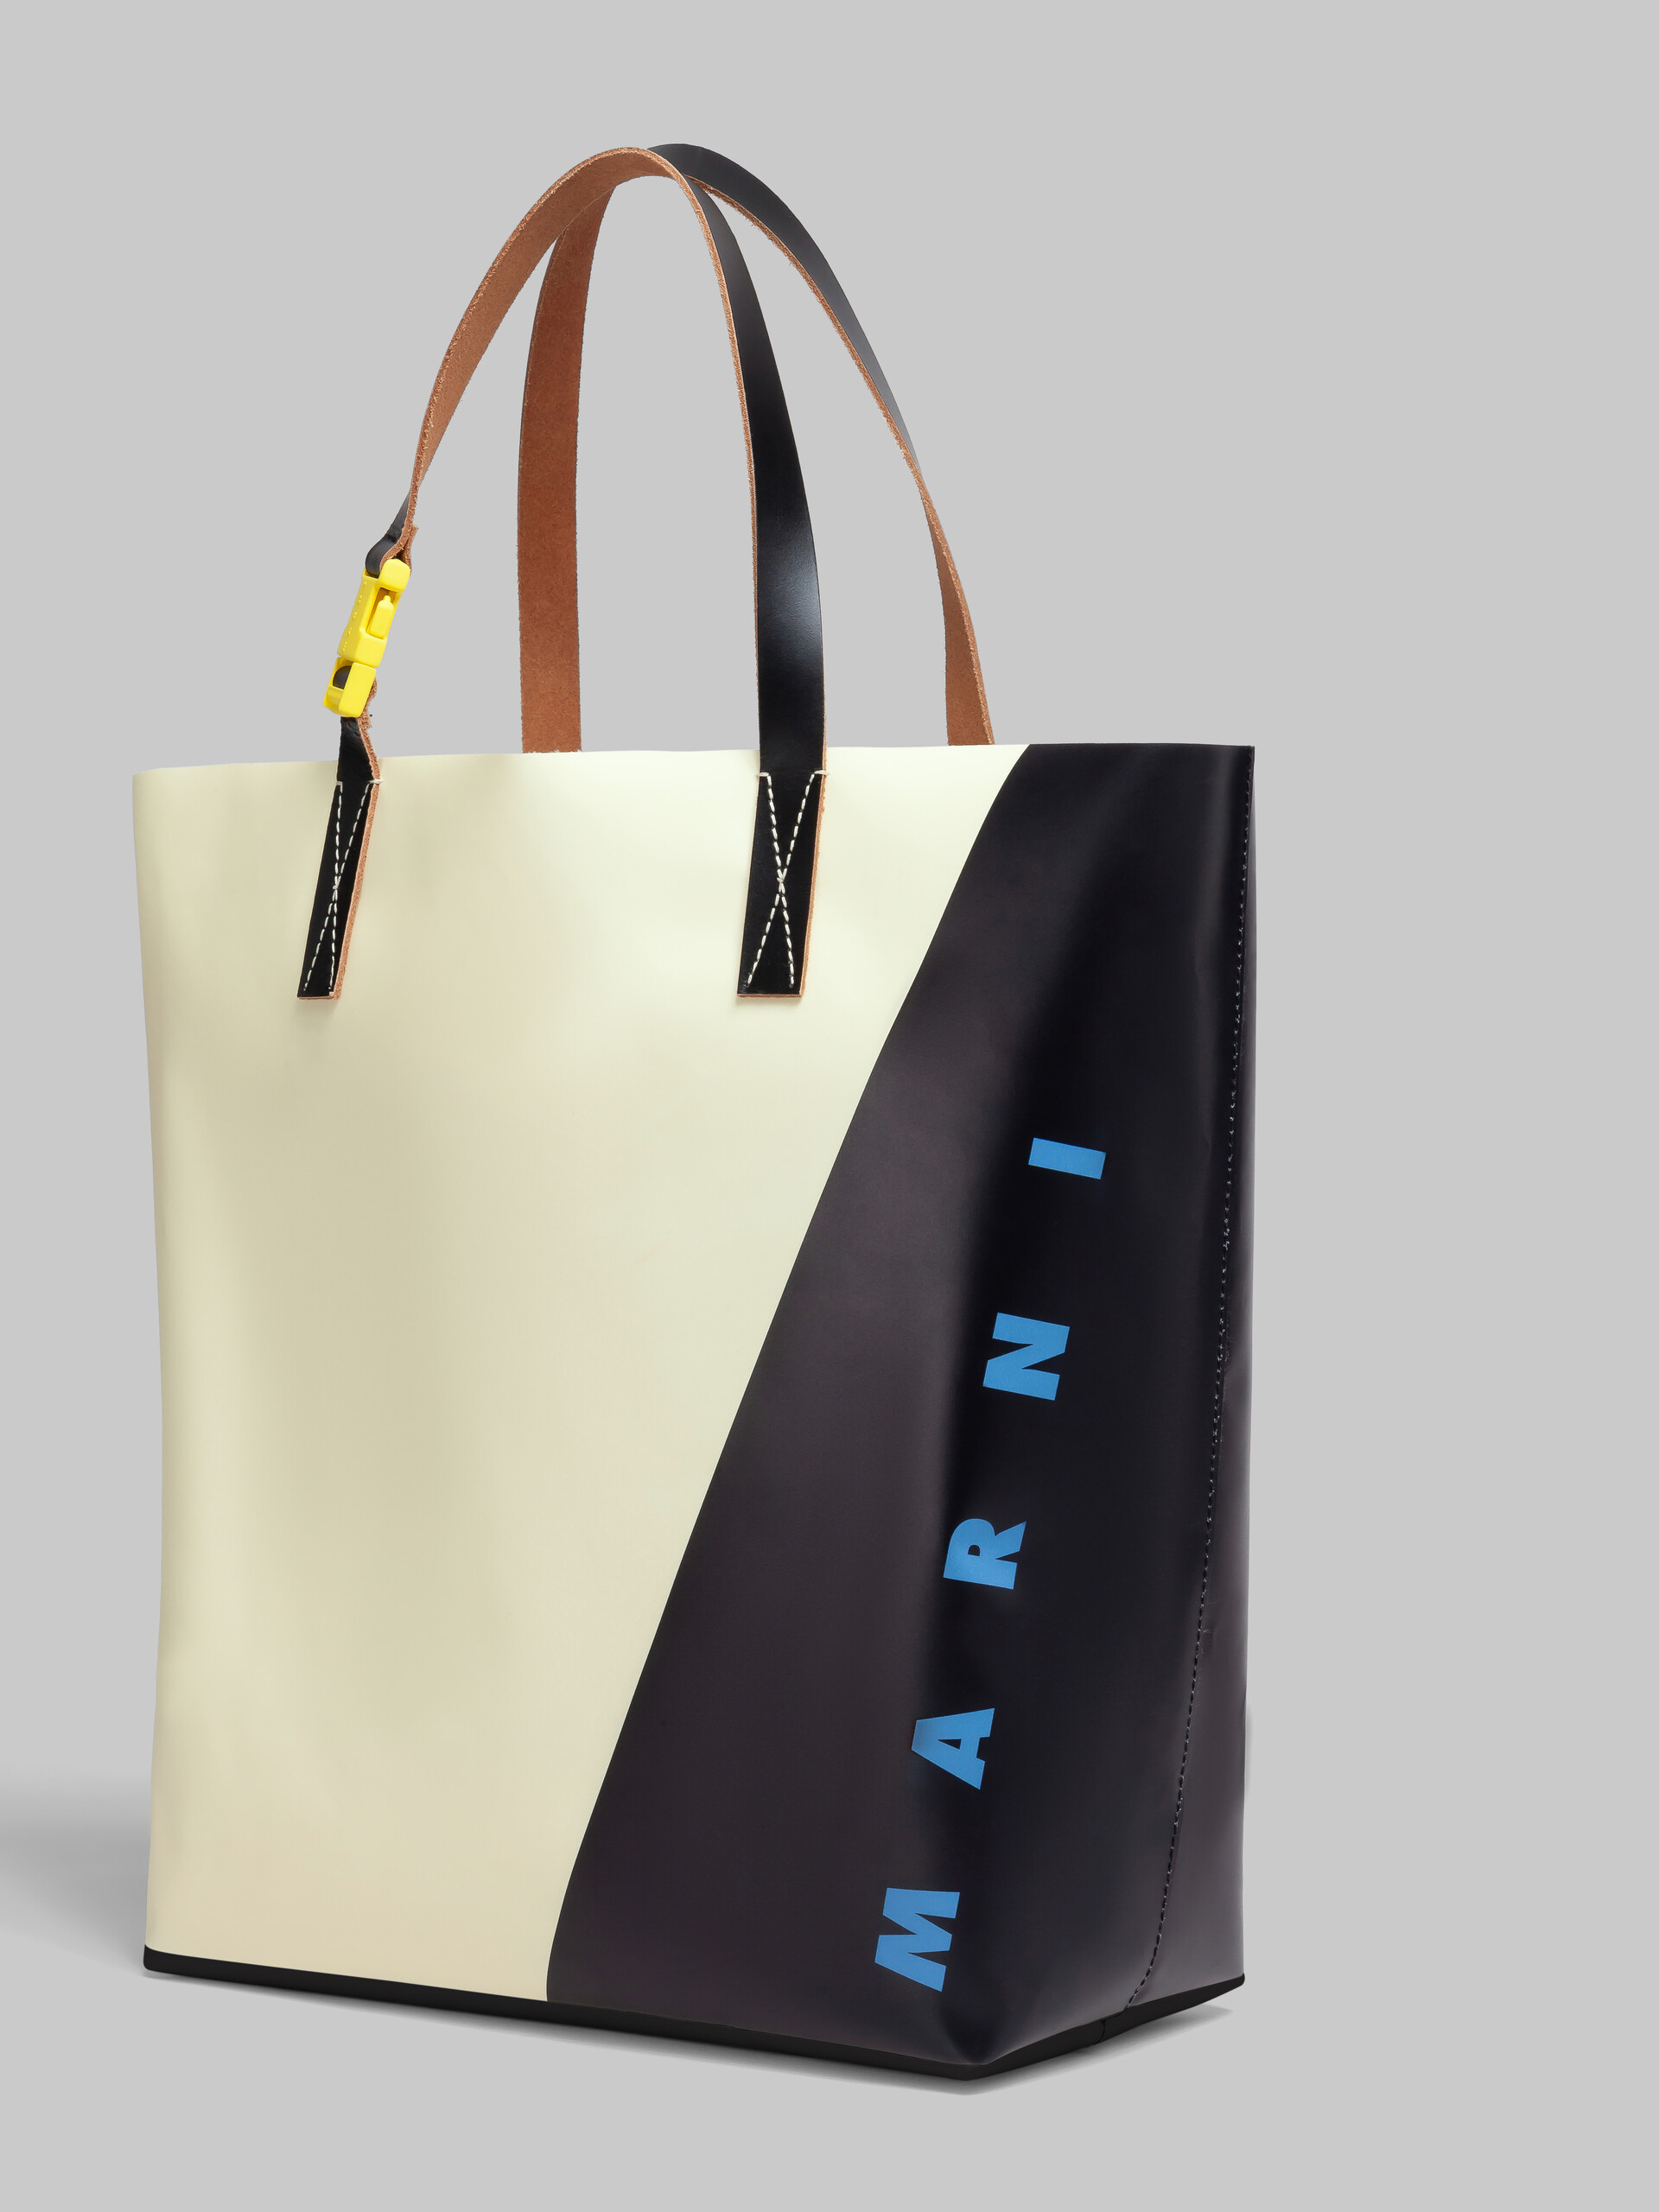 Bolso shopper Tribeca blanco y negro con etiqueta Marni - Bolsos shopper - Image 5